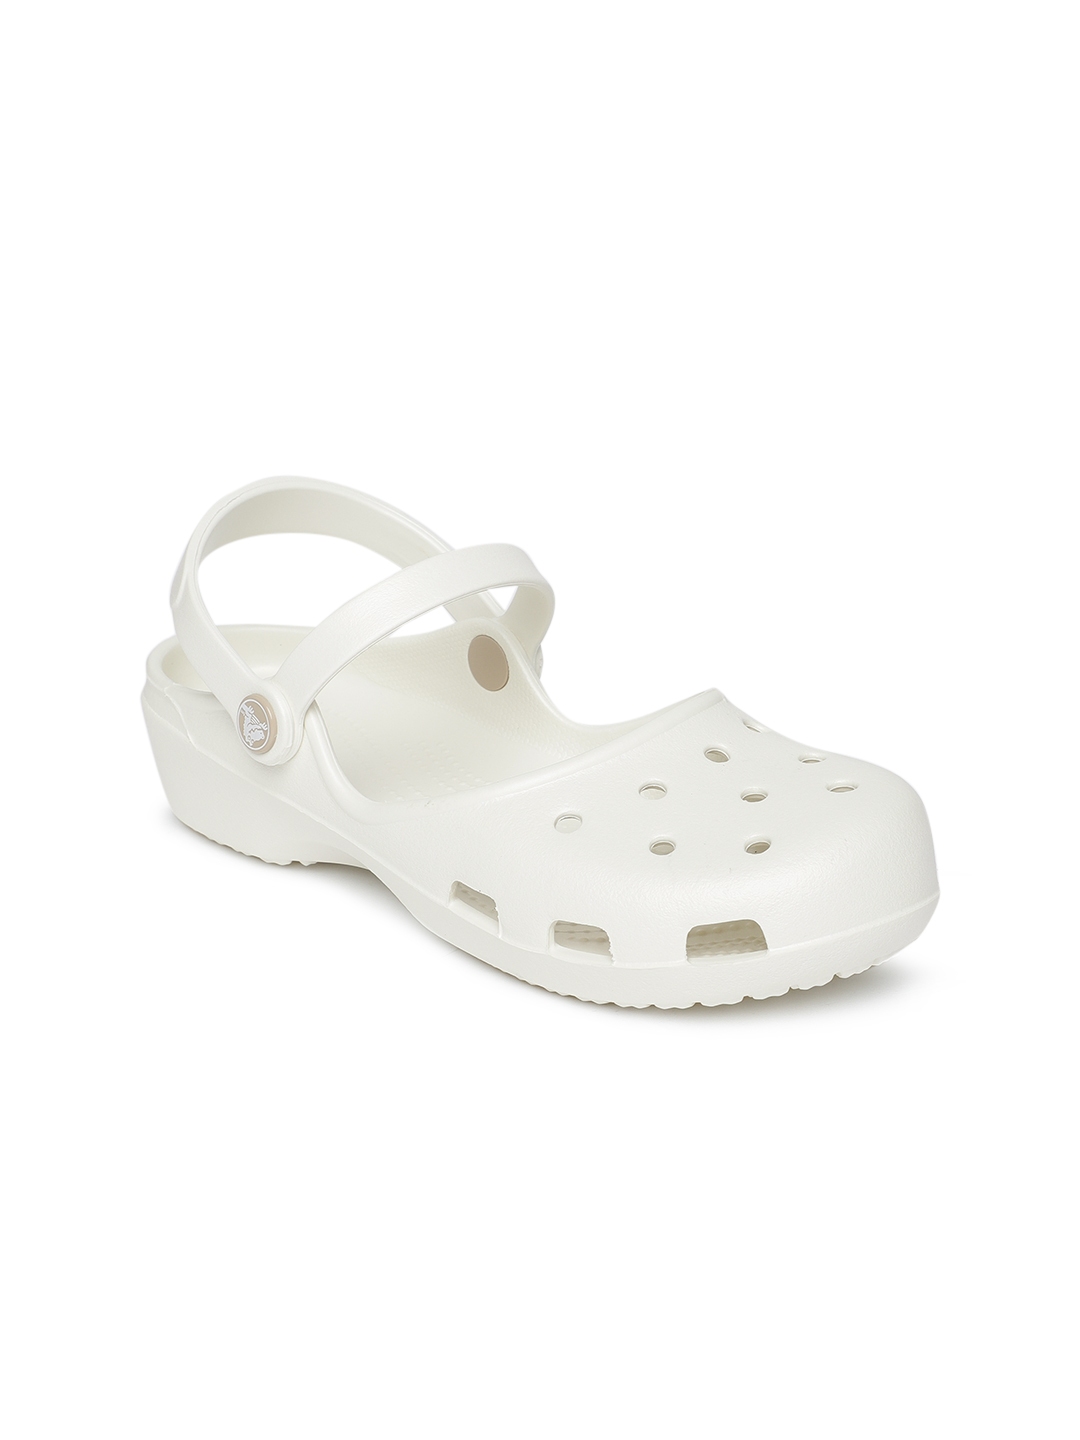 Buy Crocs Women White Solid Clogs 